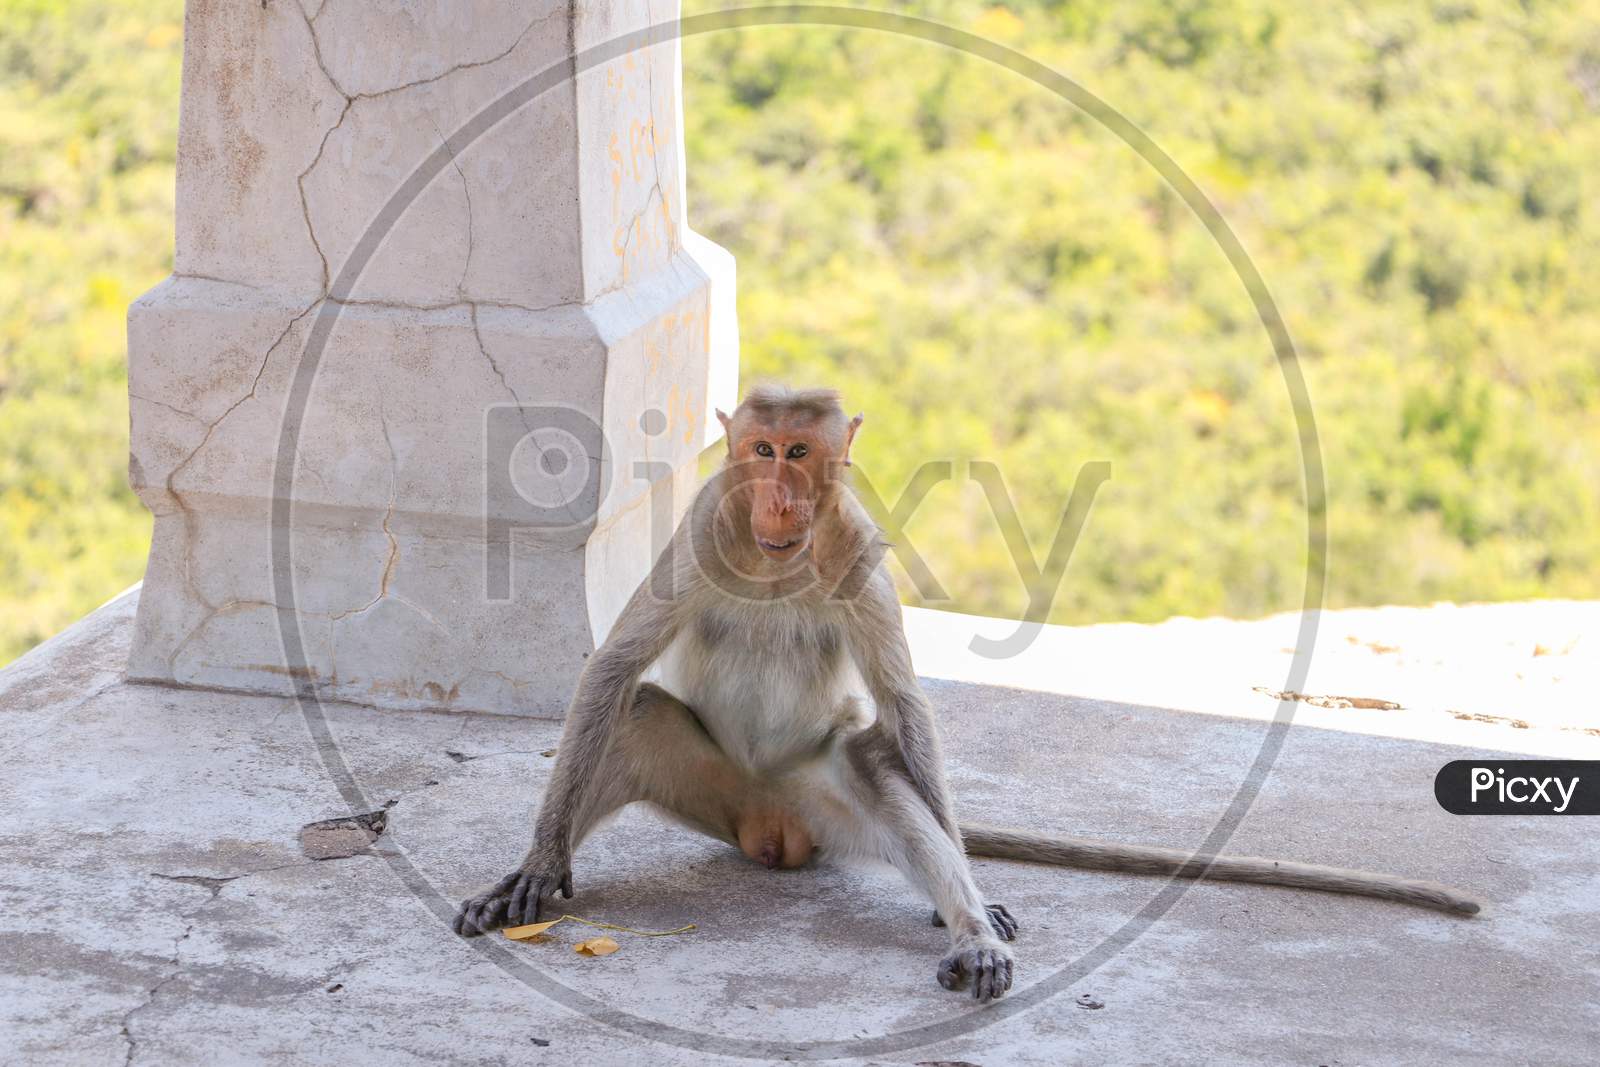 monkey at leisure